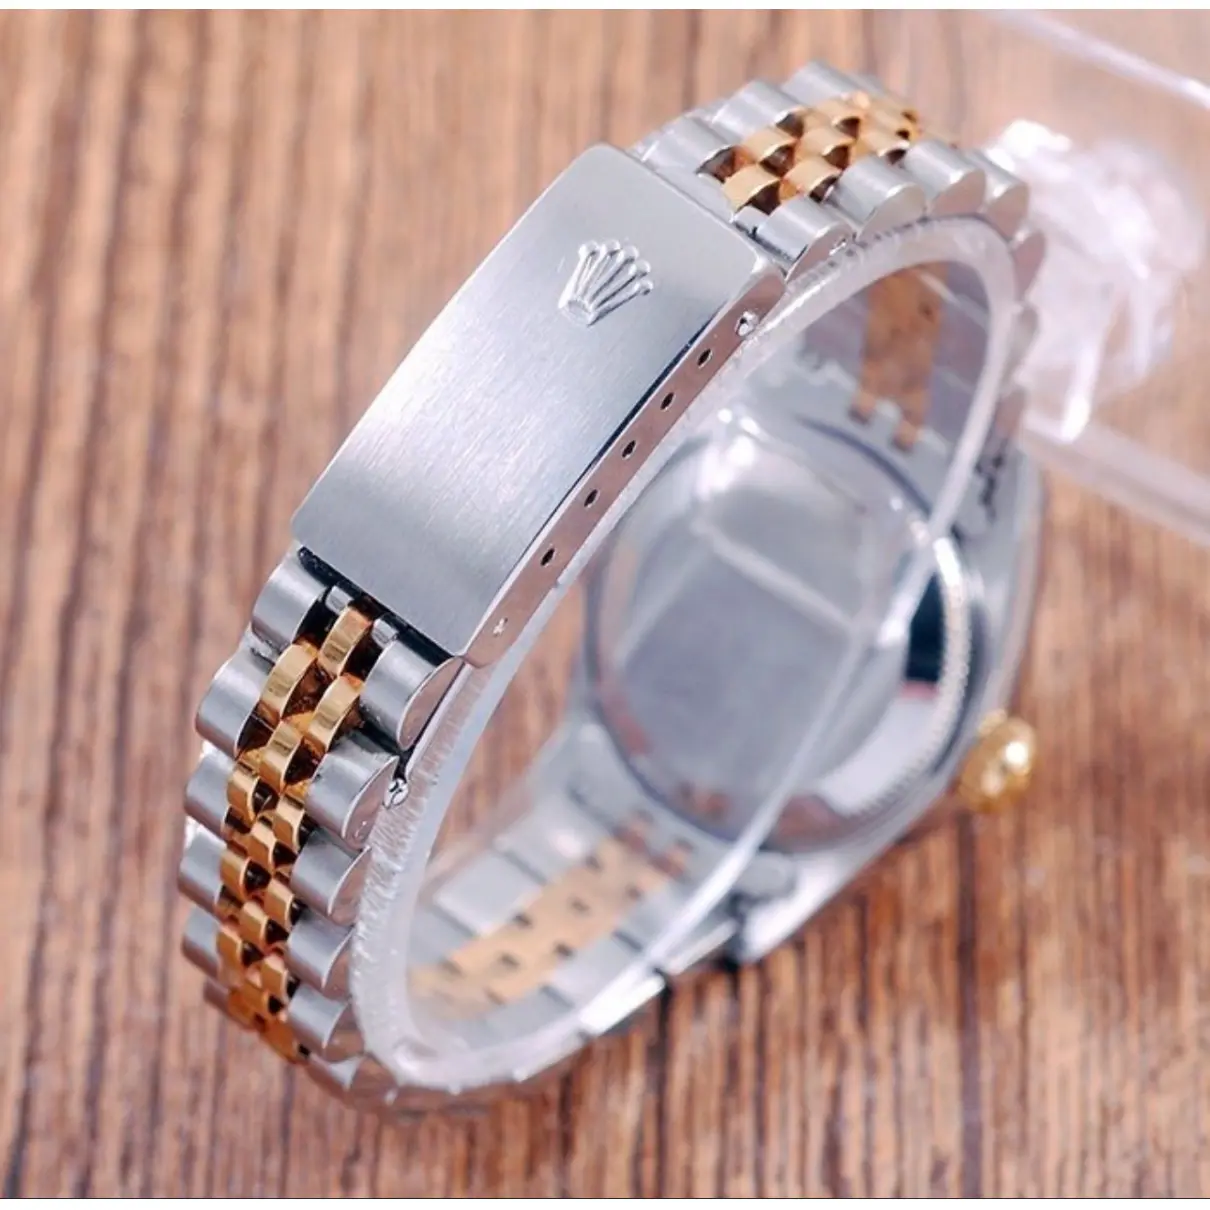 Lady DateJust 26mm watch Rolex